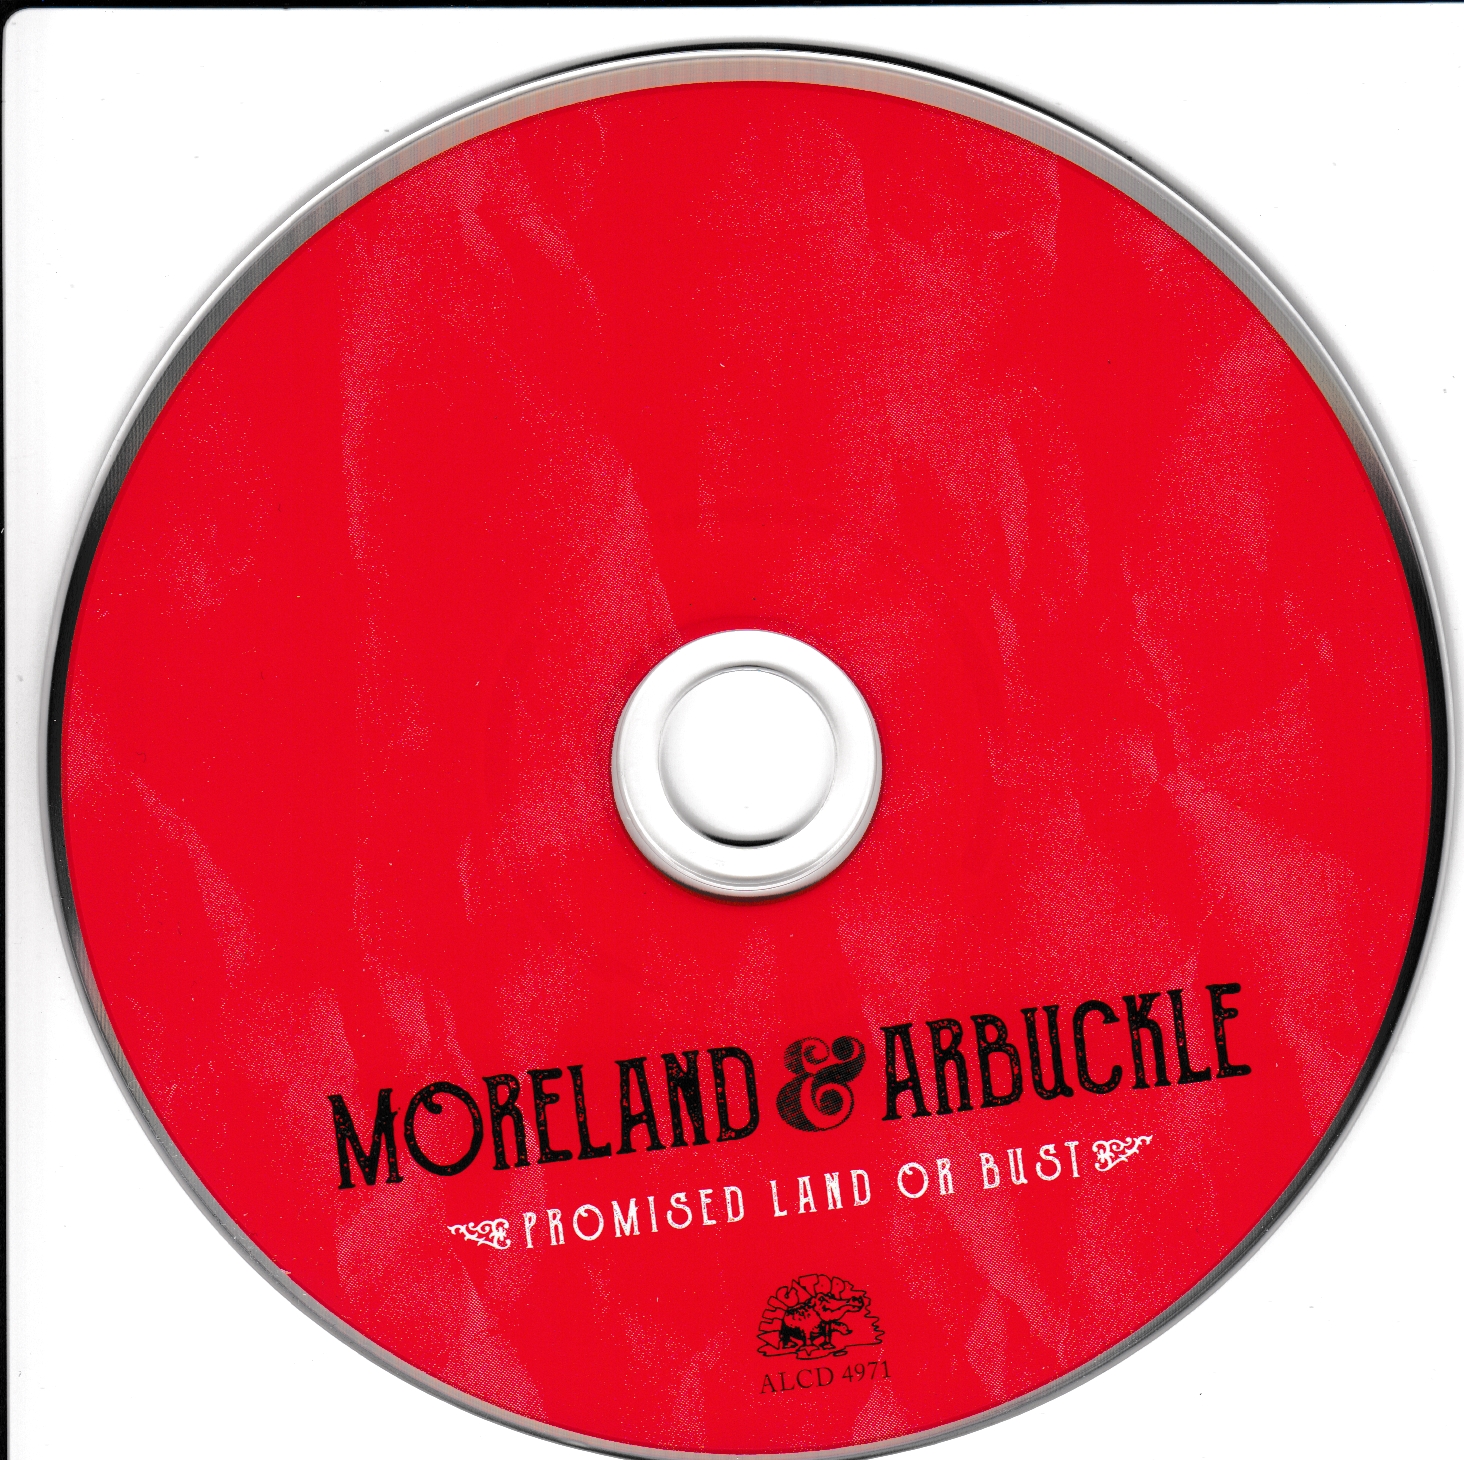 Moreland Arbuckle - Promised Land Or Bust - CD